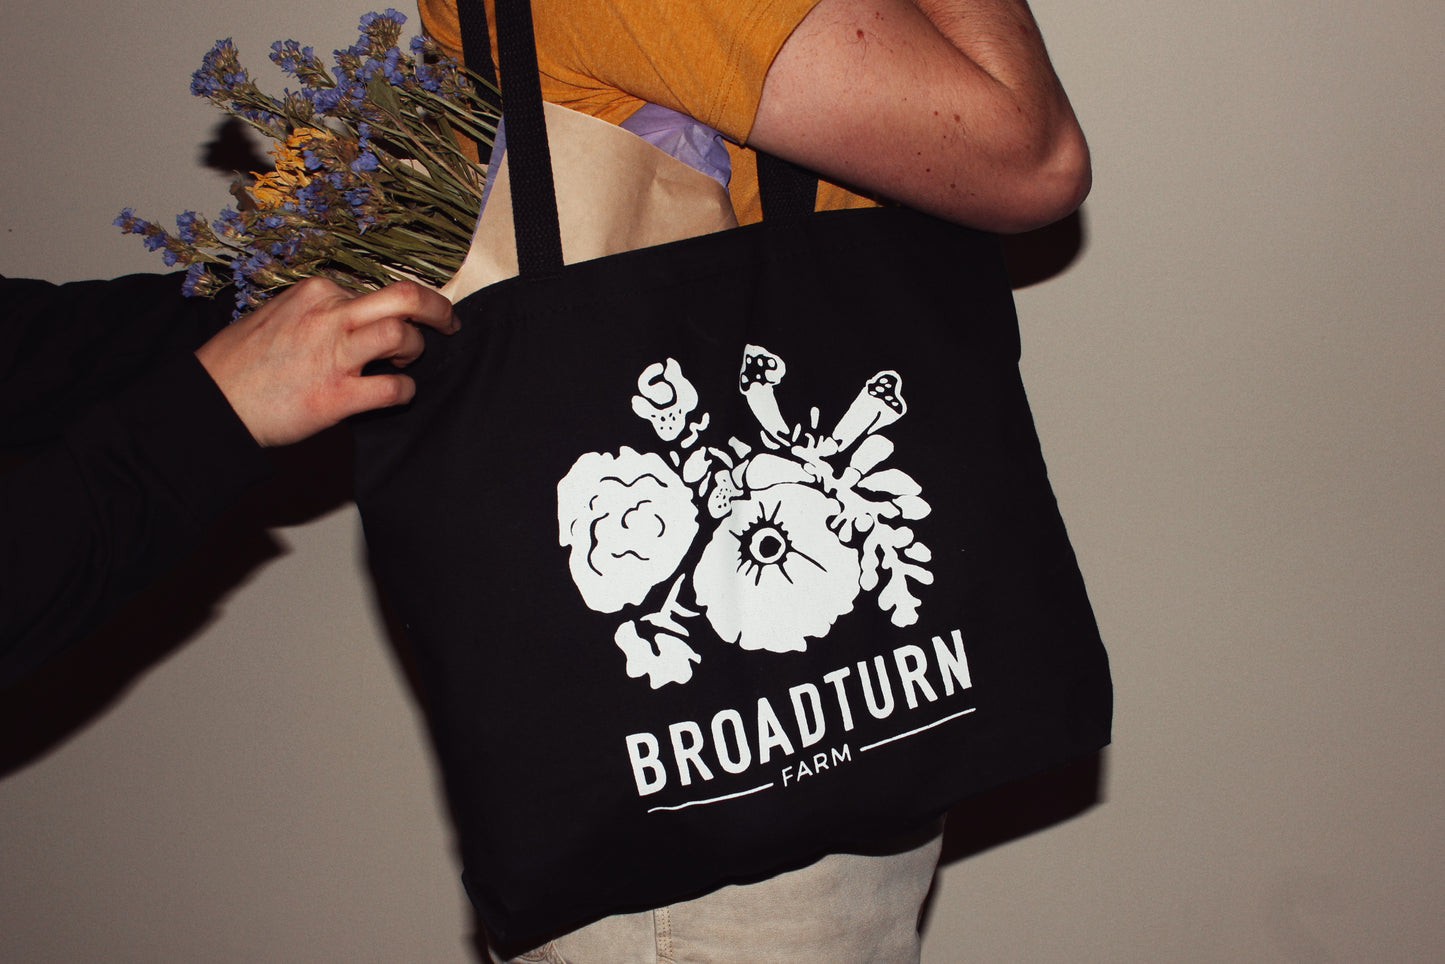 Broadturn Farm Tote Bag